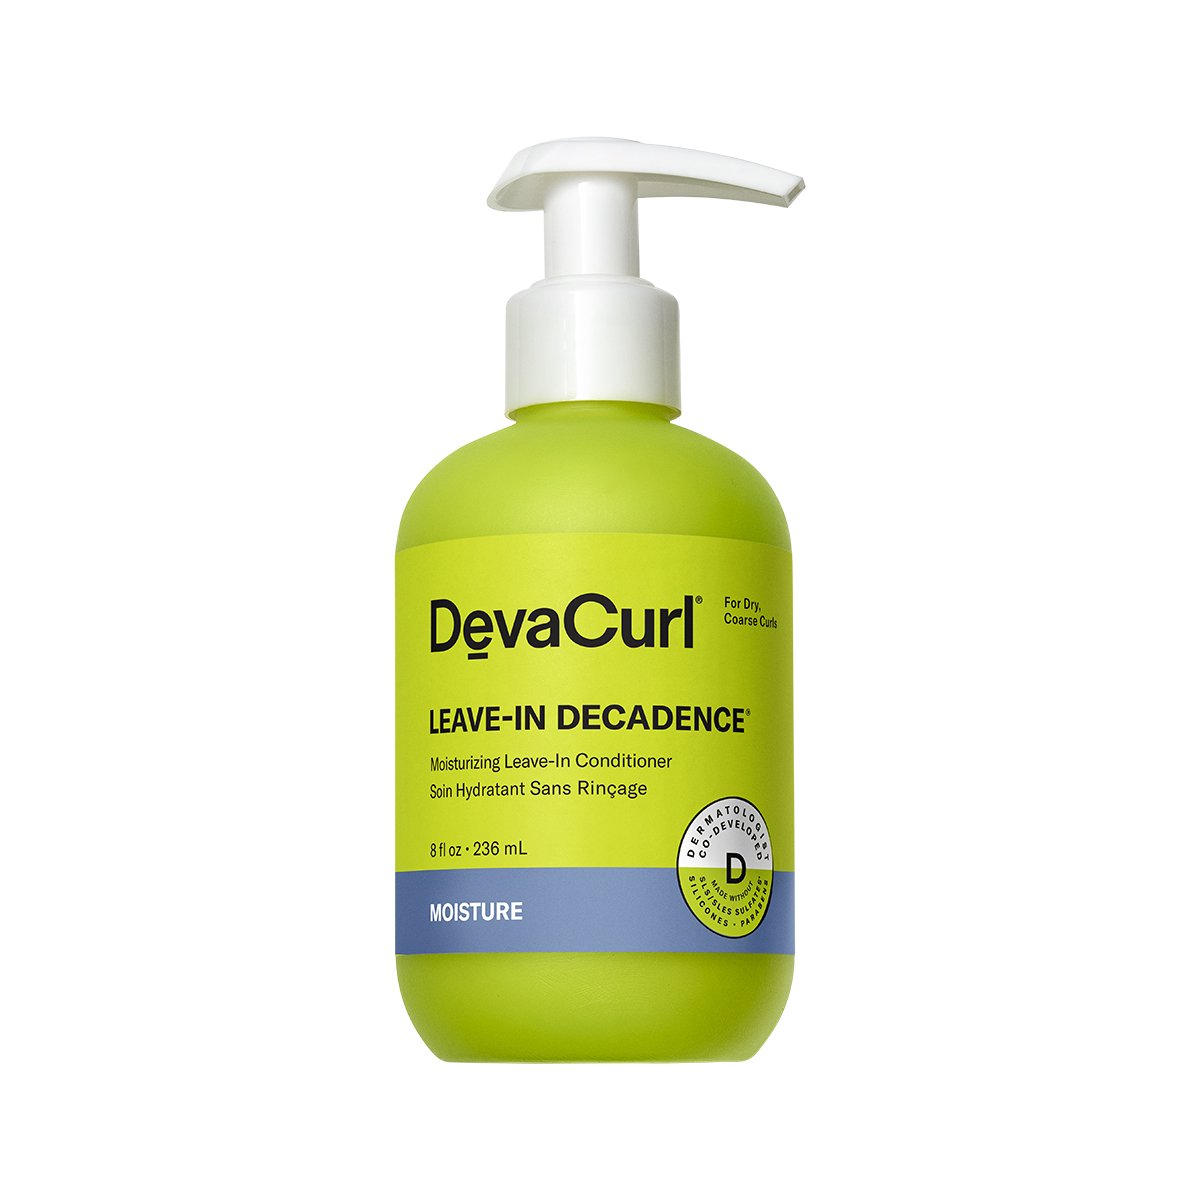 DevaCurl Leave-In Decadence |8oz| - by Deva Curl |ProCare Outlet|